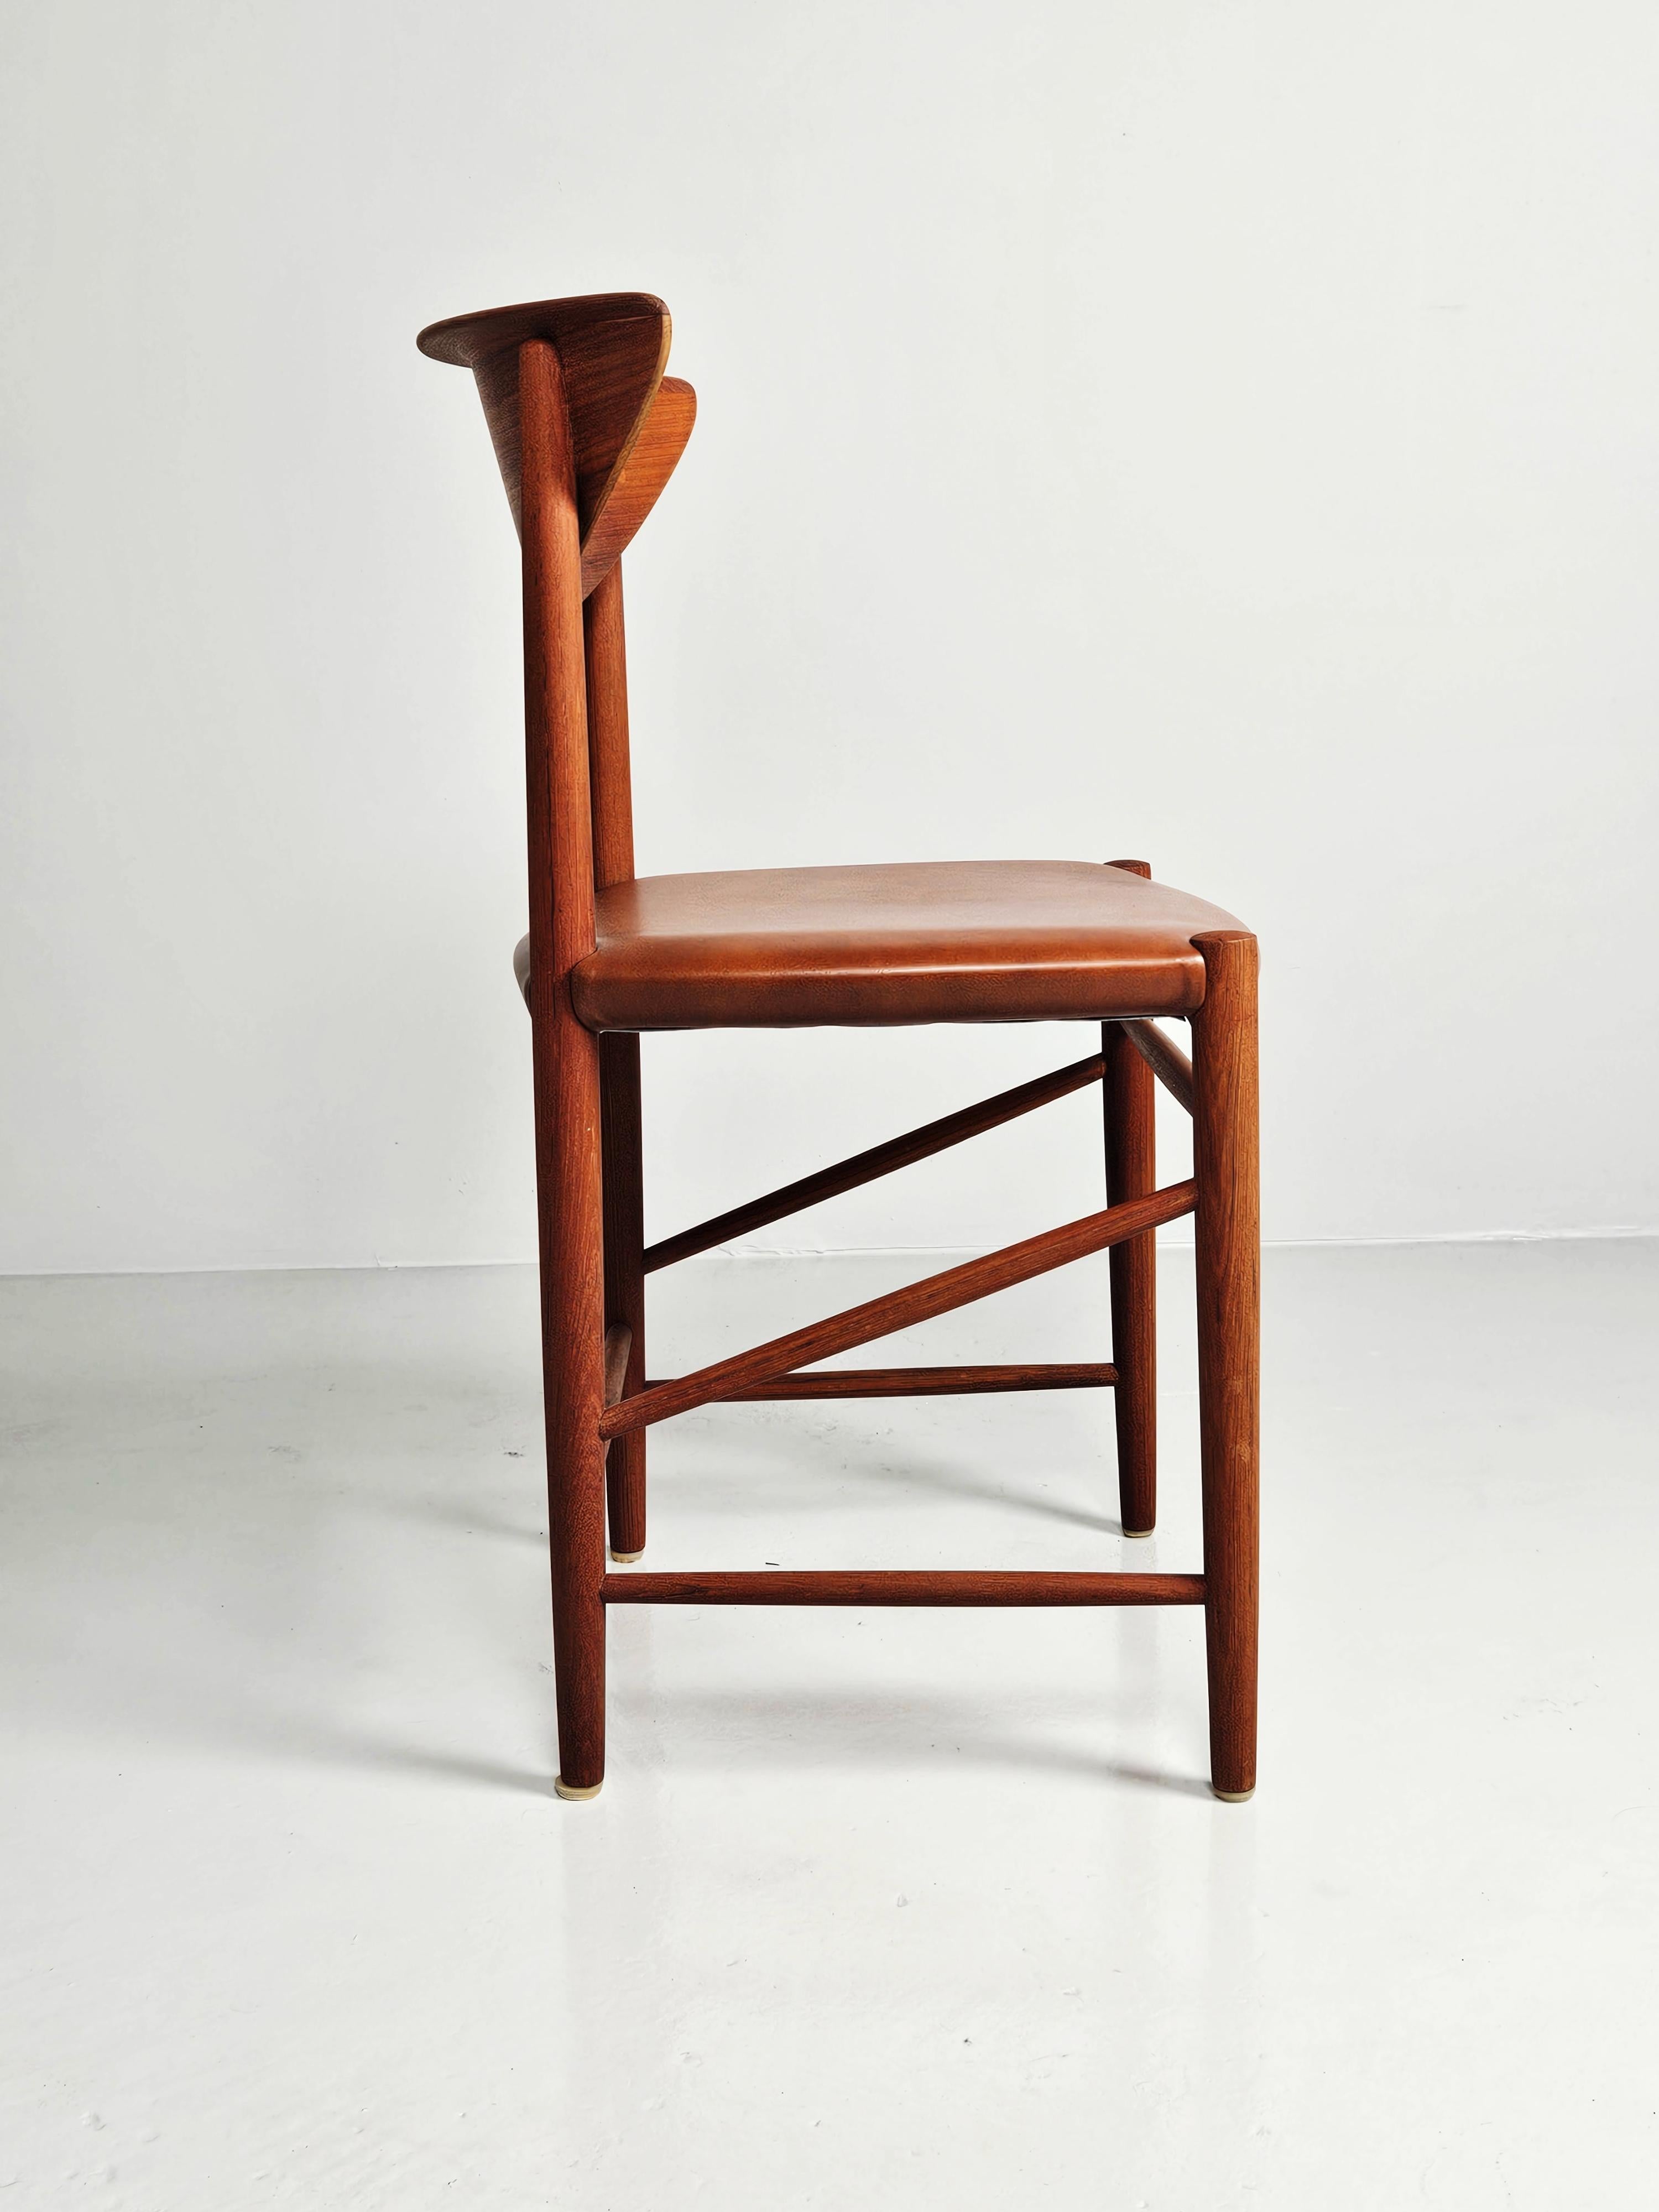 Scandinavian modern dining chair by Peter Hvidt, Denmark, 1950s For Sale 1